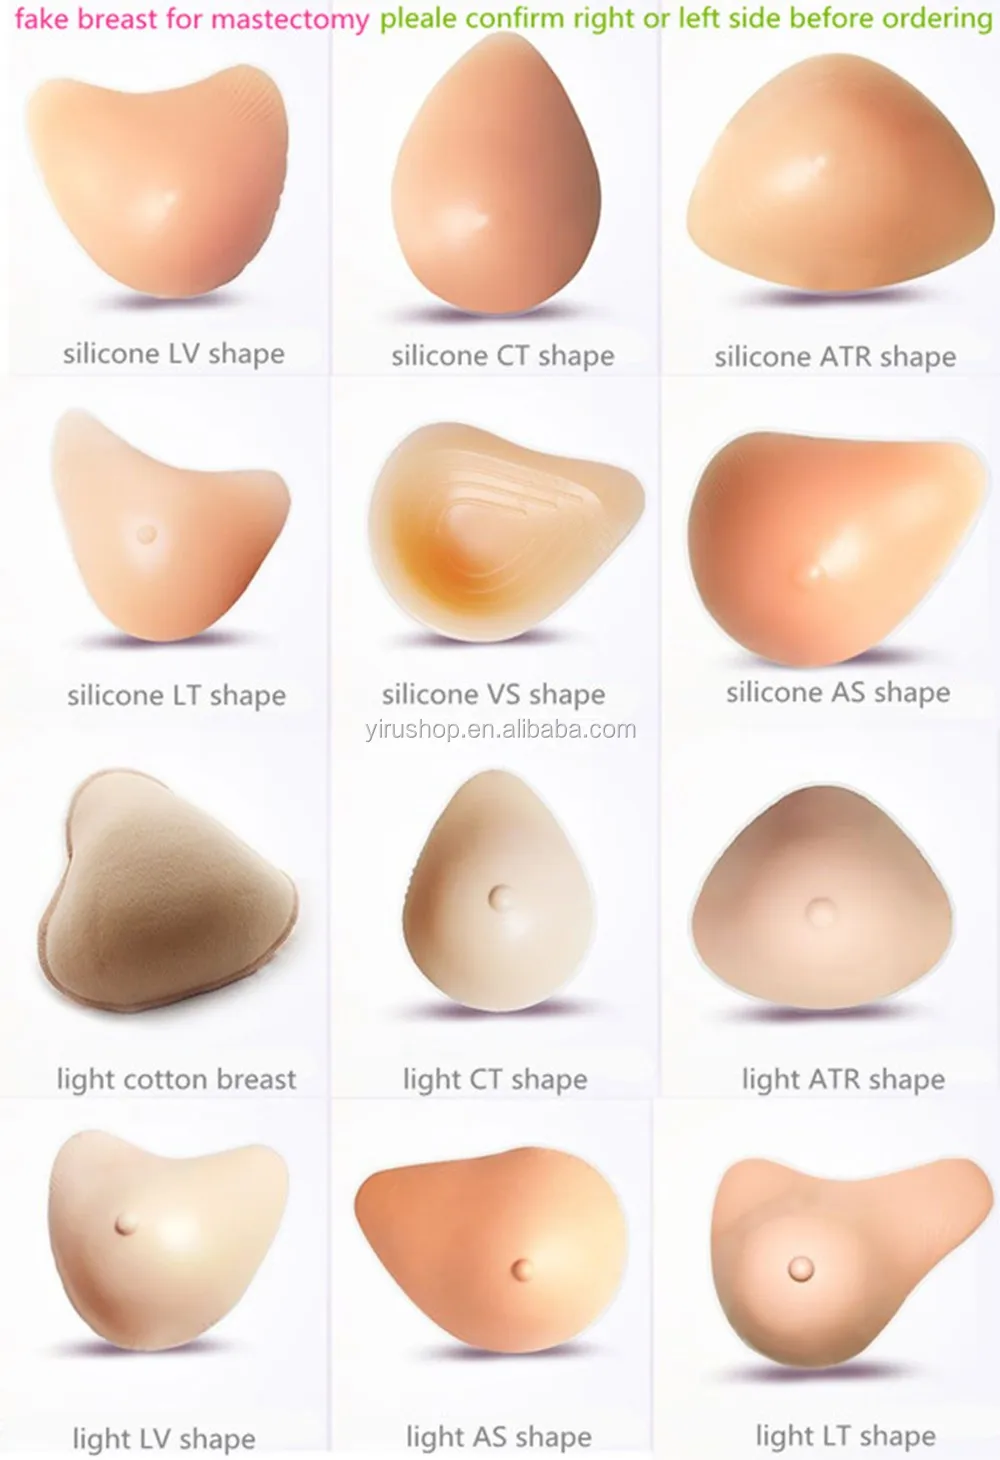 виды форм груди женщин фото 37